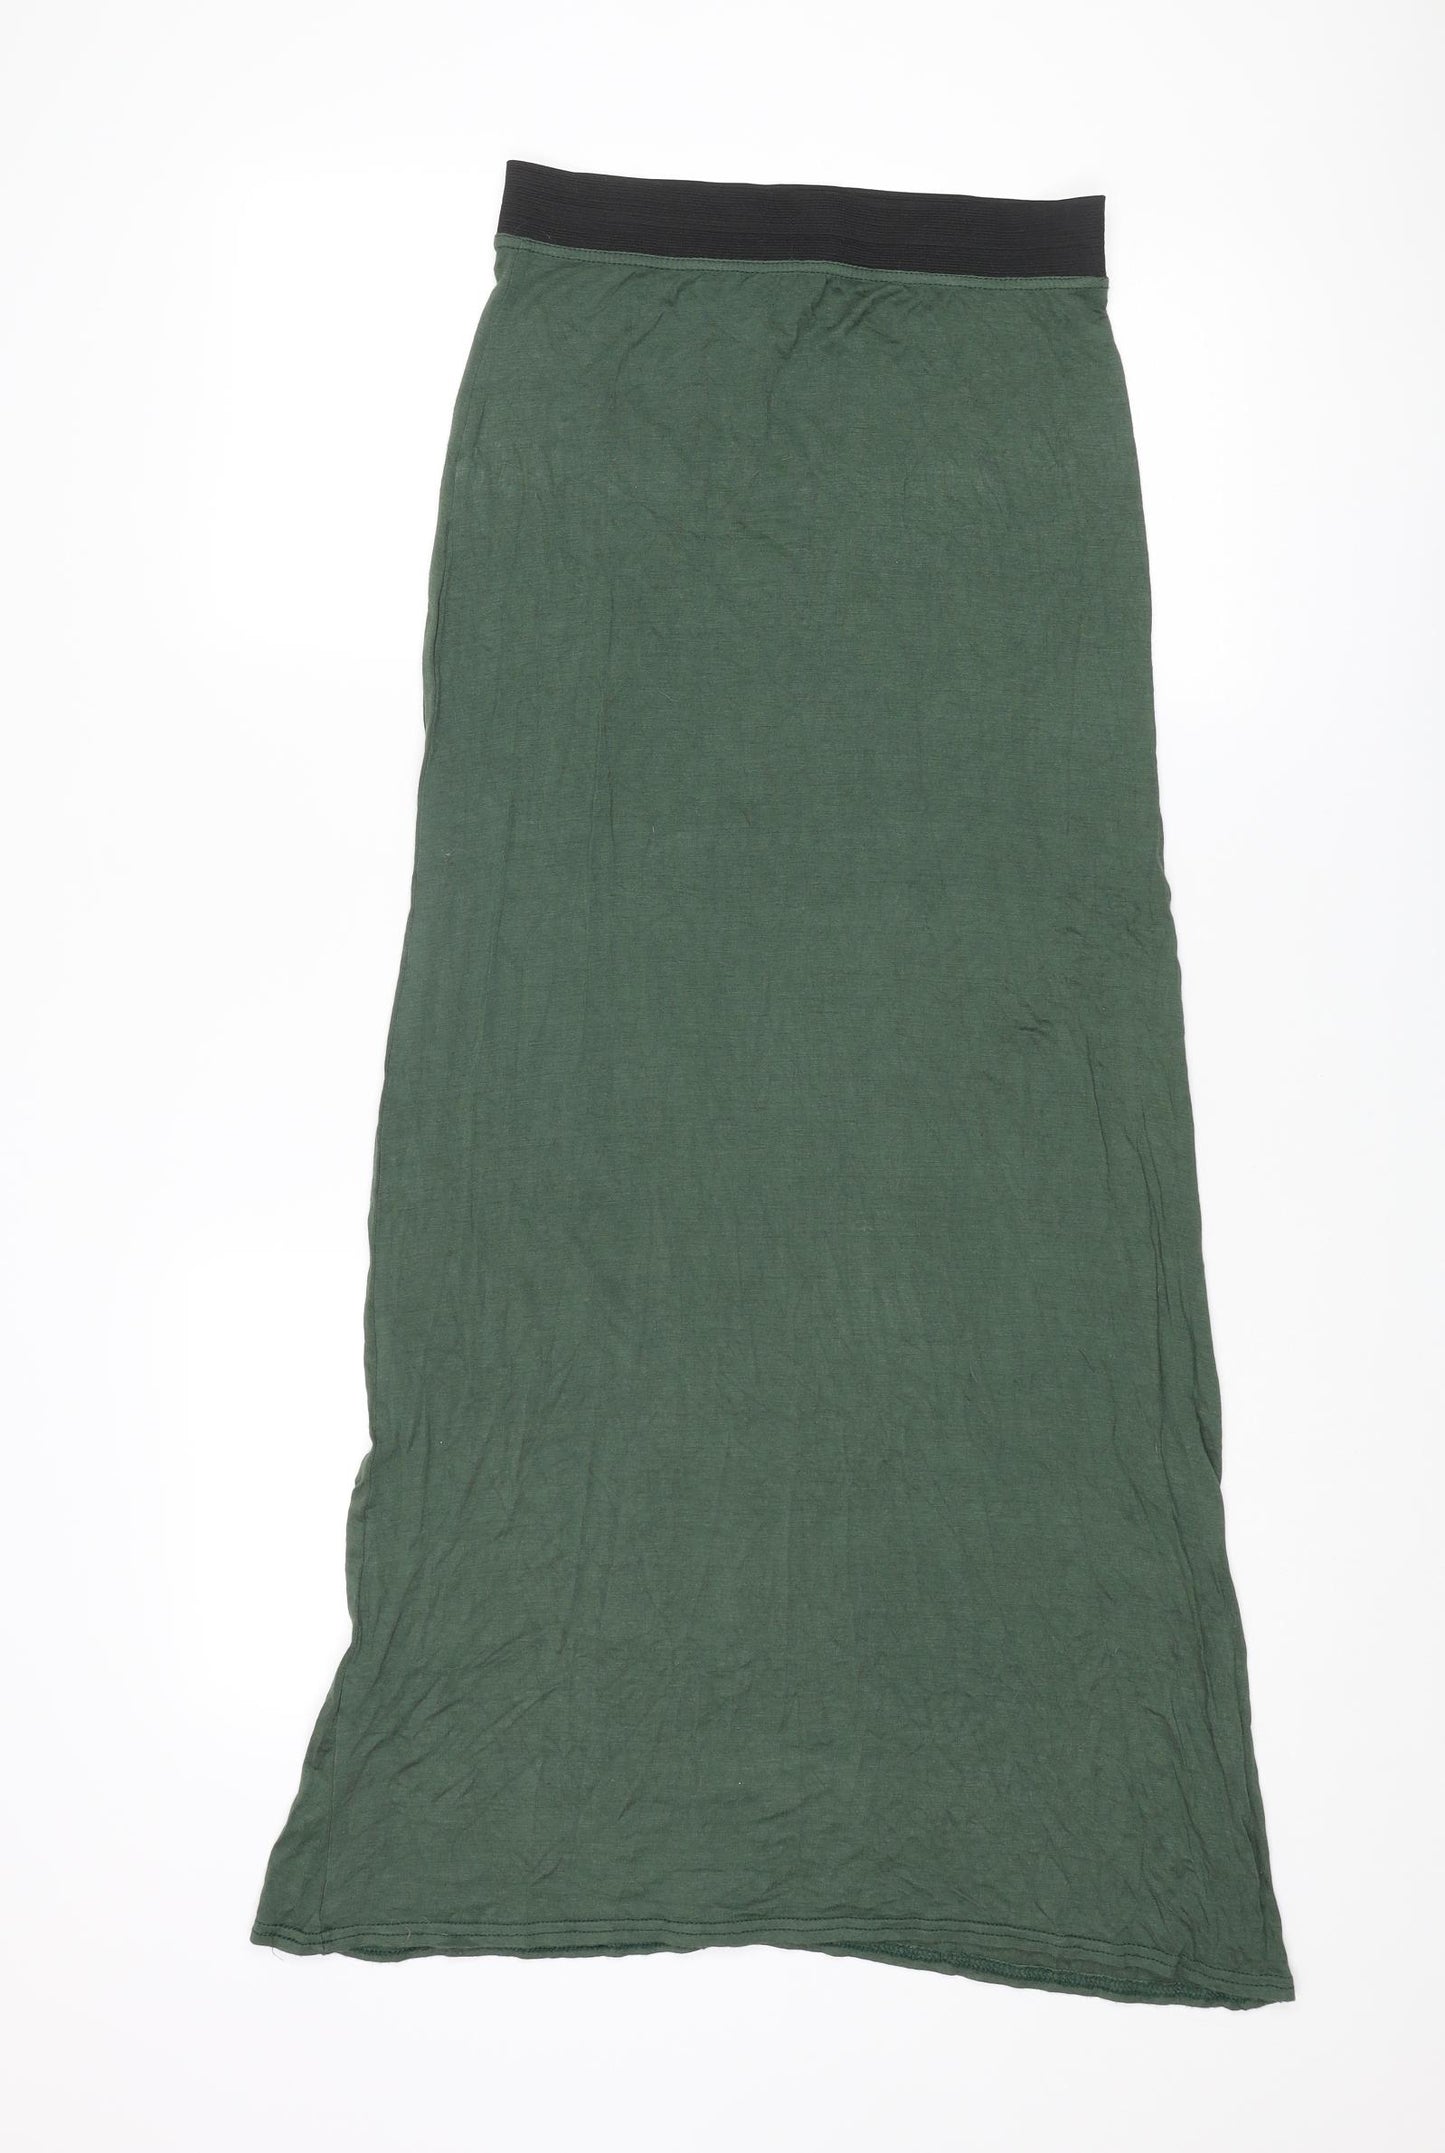 Boohoo Womens Green Viscose Maxi Skirt Size 12